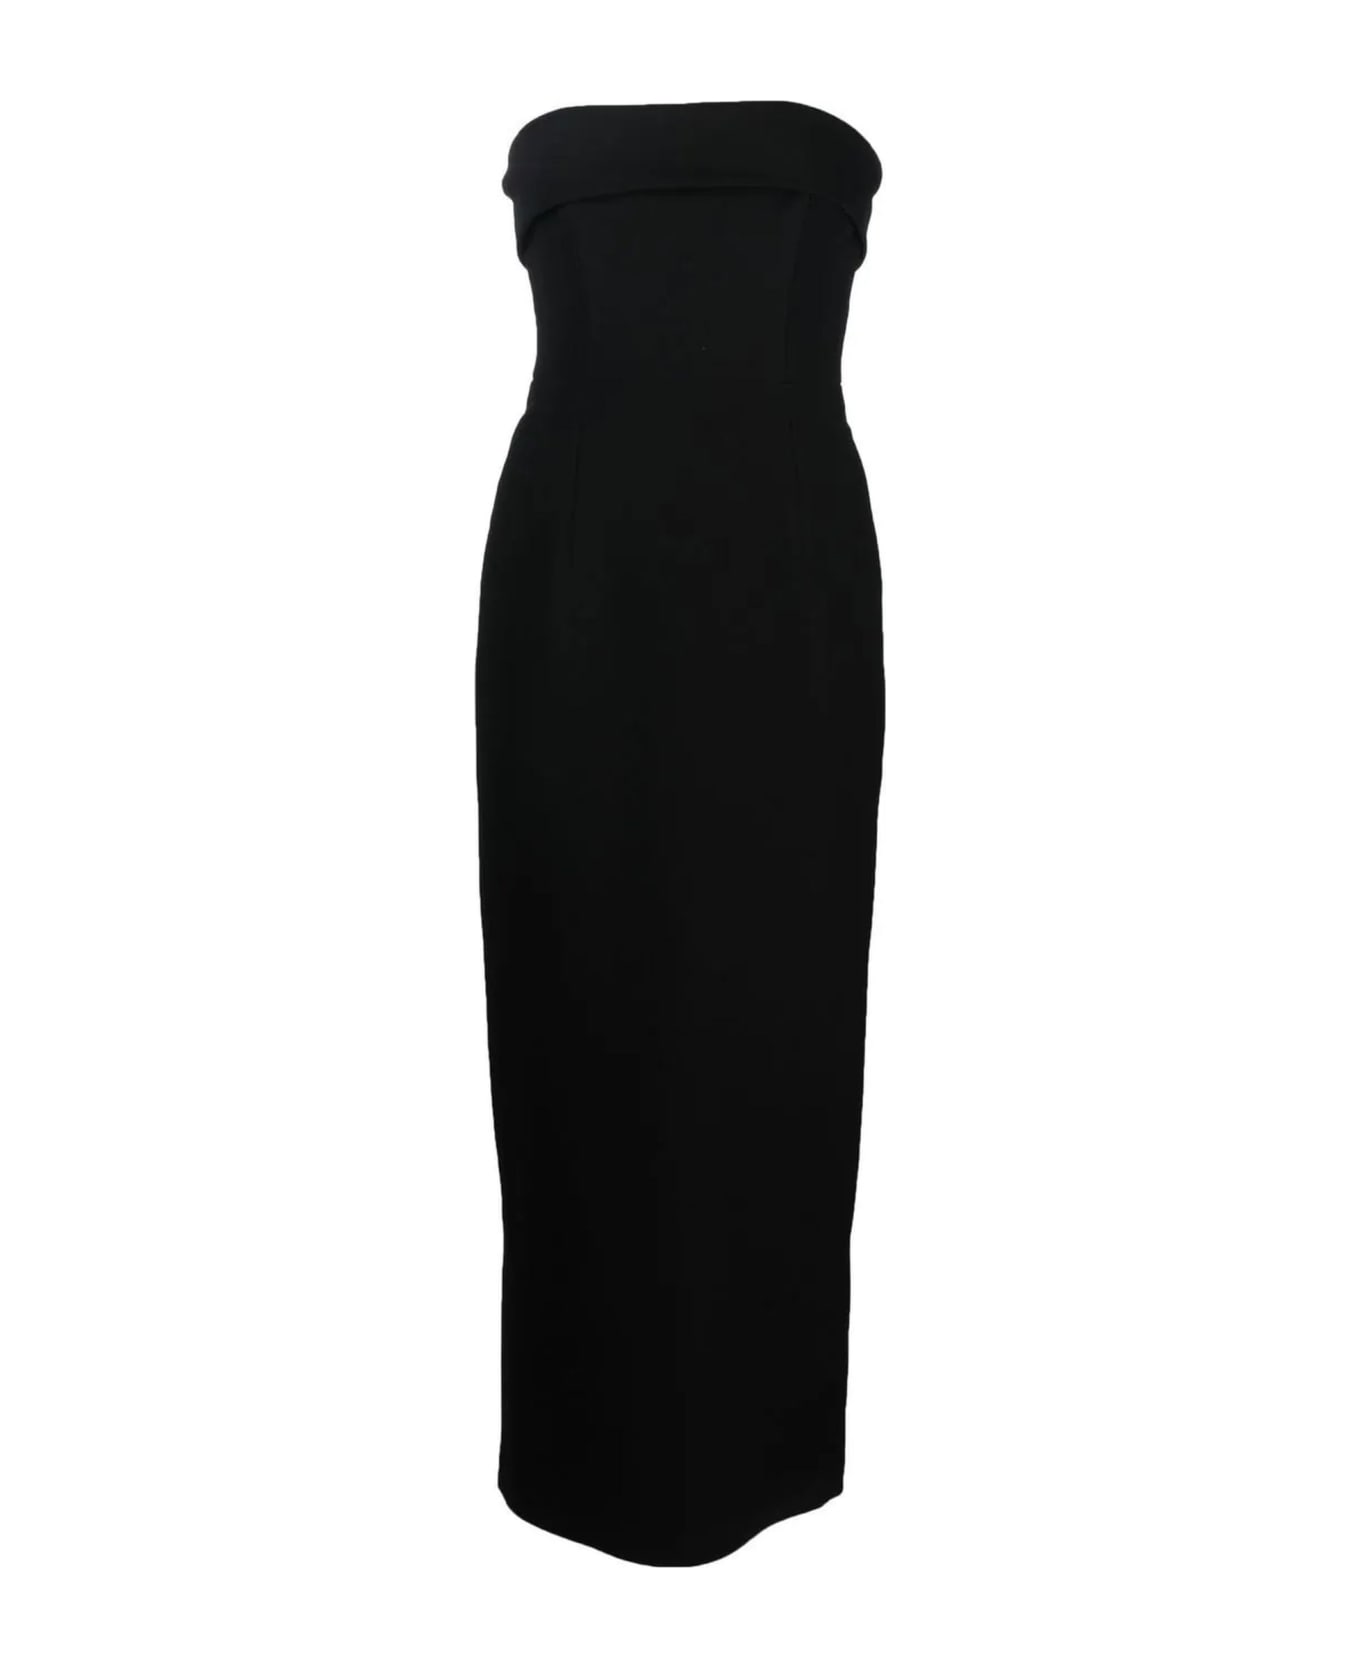 NEW ARRIVALS Black Long Dress - Nero